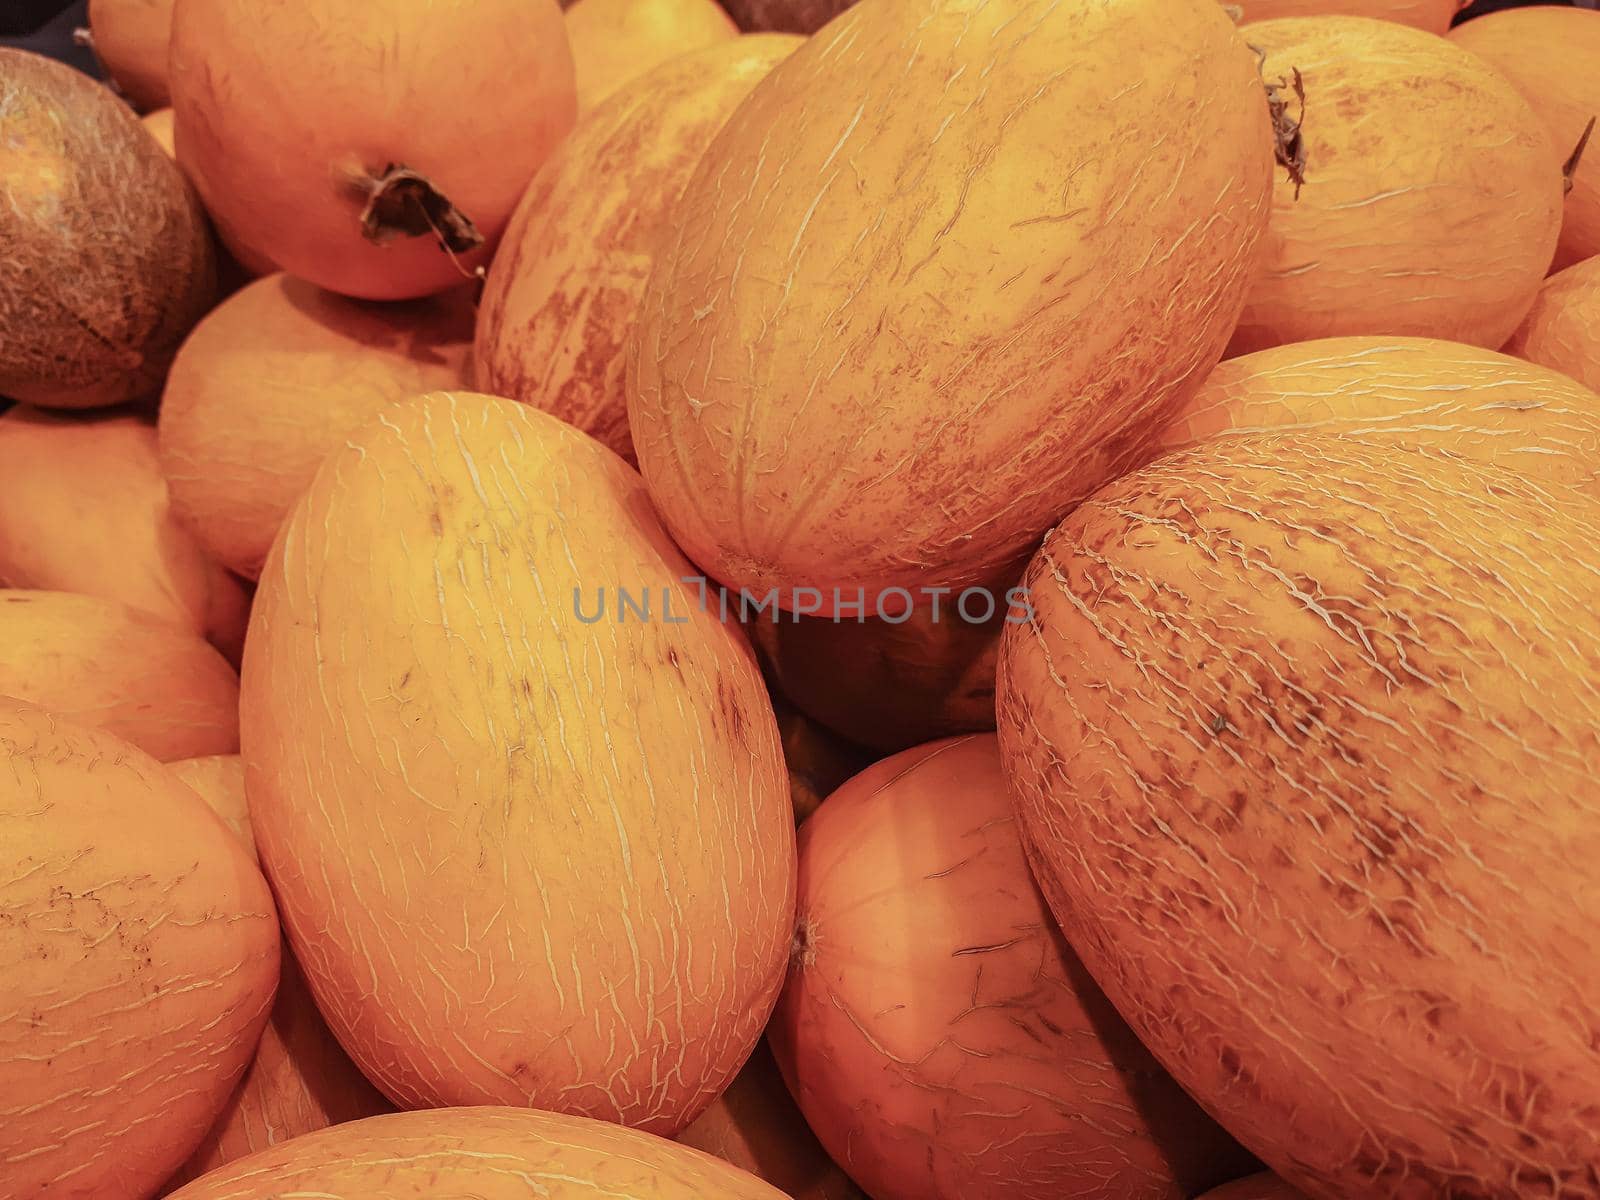 Harvest of ripe melon. Close-up background image. Stock photo